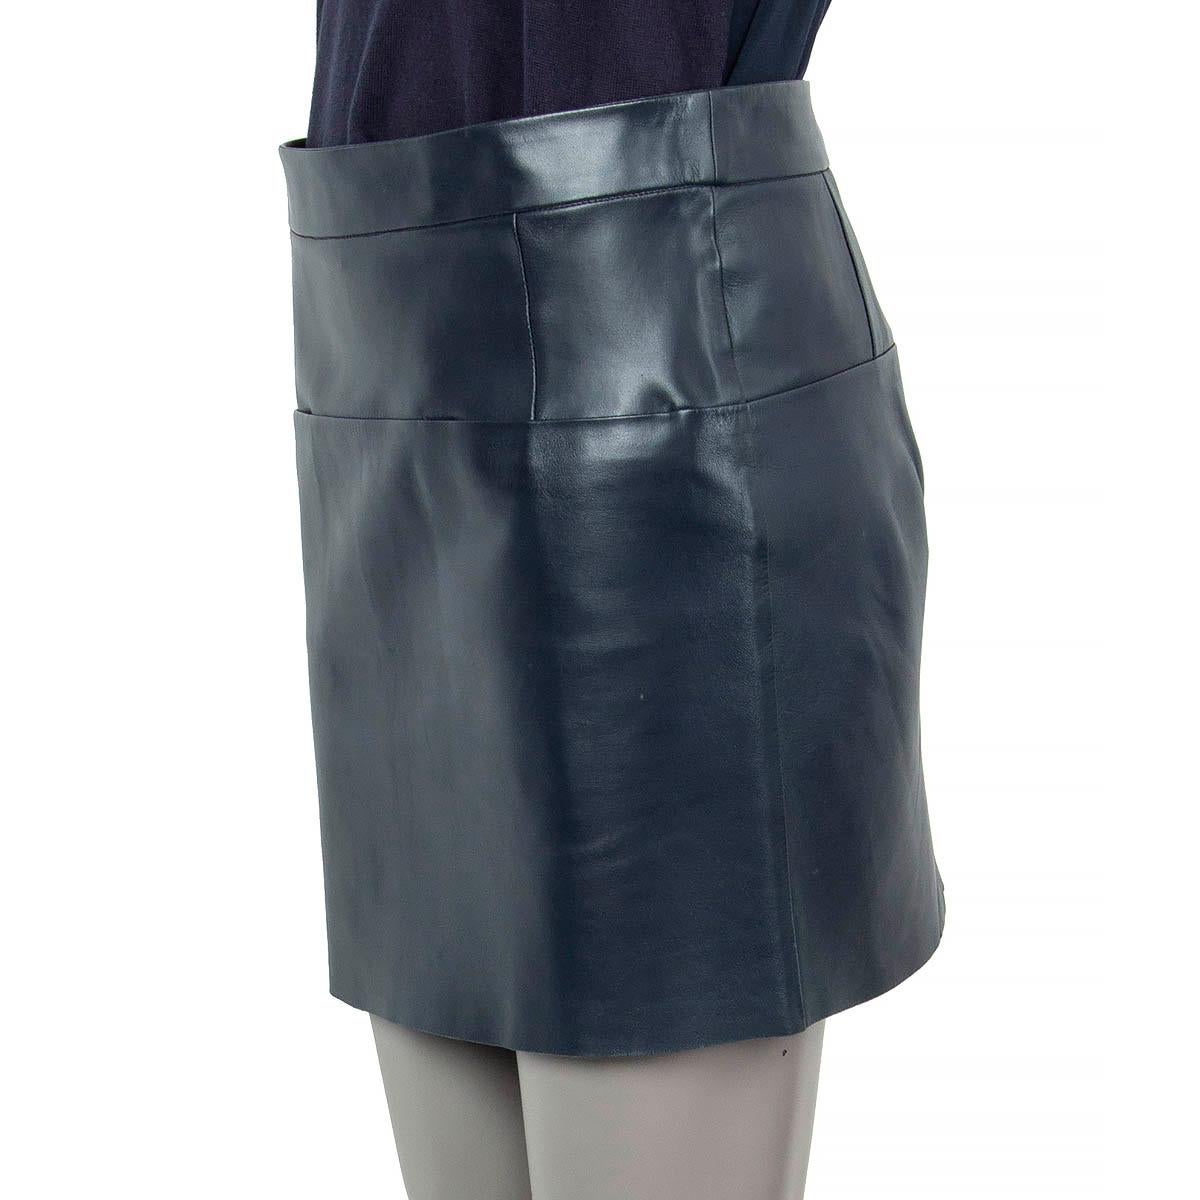 Black CELINE navy blue leather FRONT POCKET MINI Skirt 36 XS For Sale